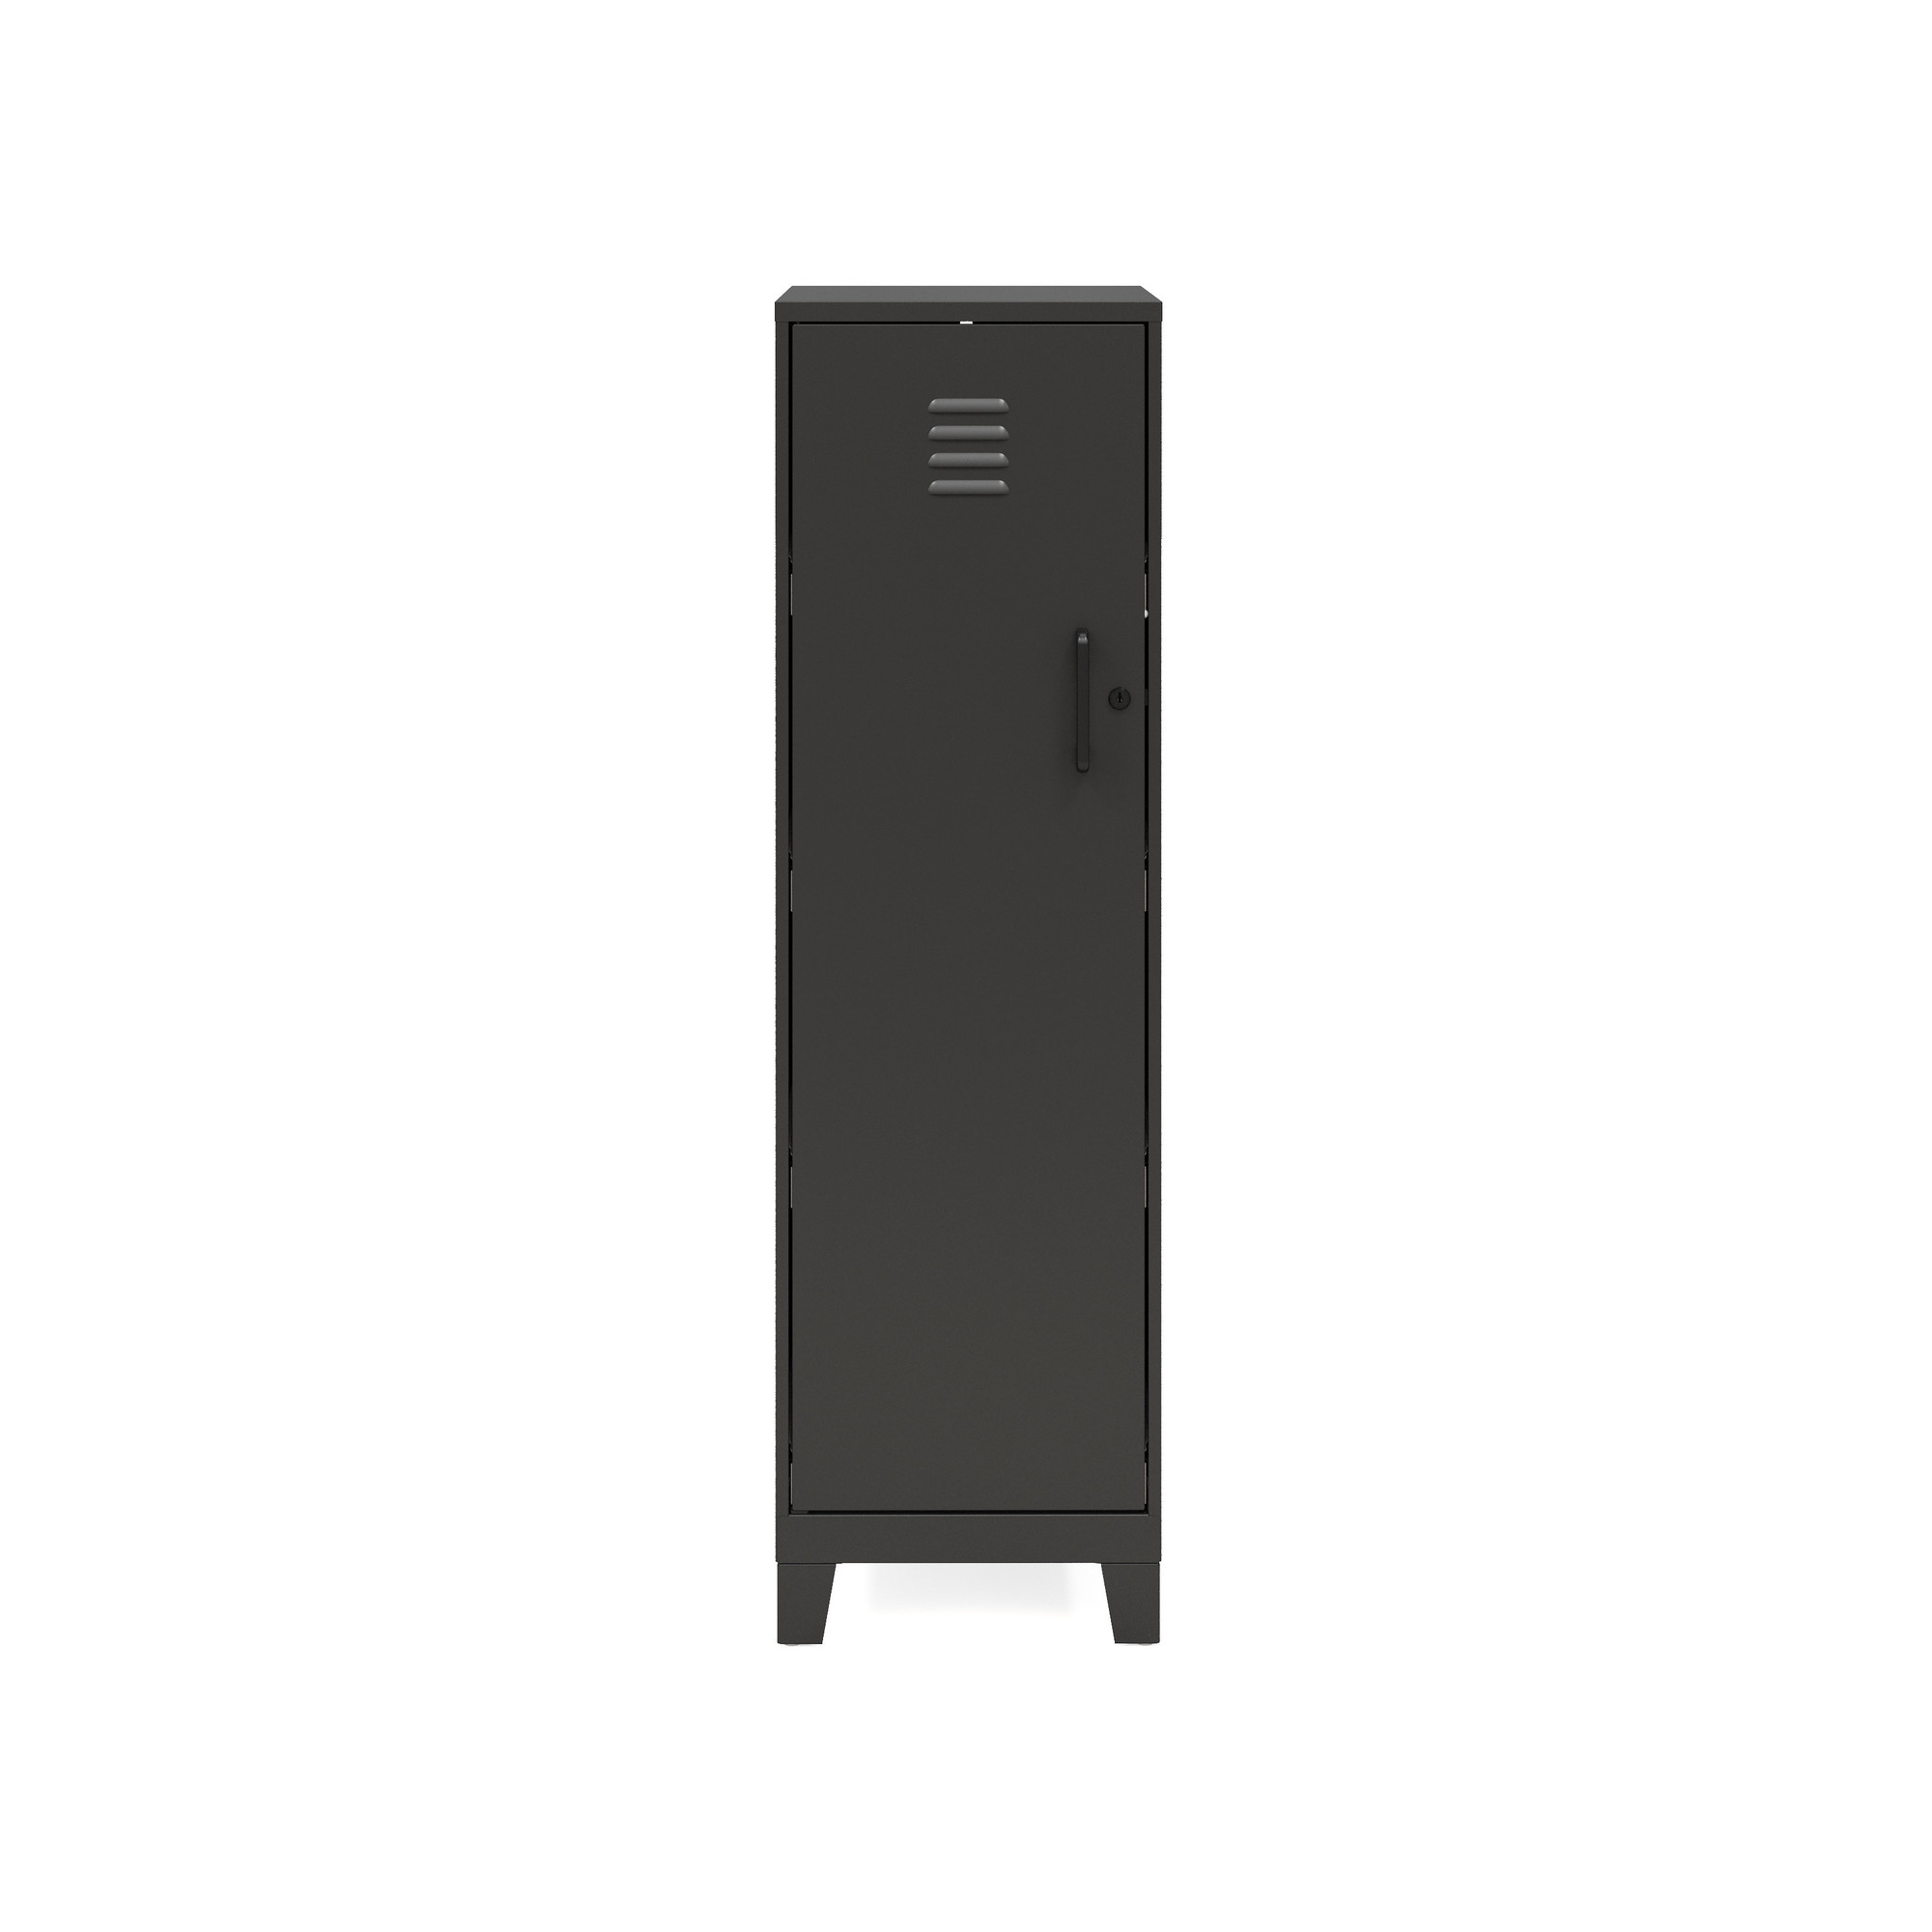 Hirsh Industries, 4 Shelf Storage Locker Cabinet, Height 49.38 in, Width 14.25 in, Color Black, Model 25225